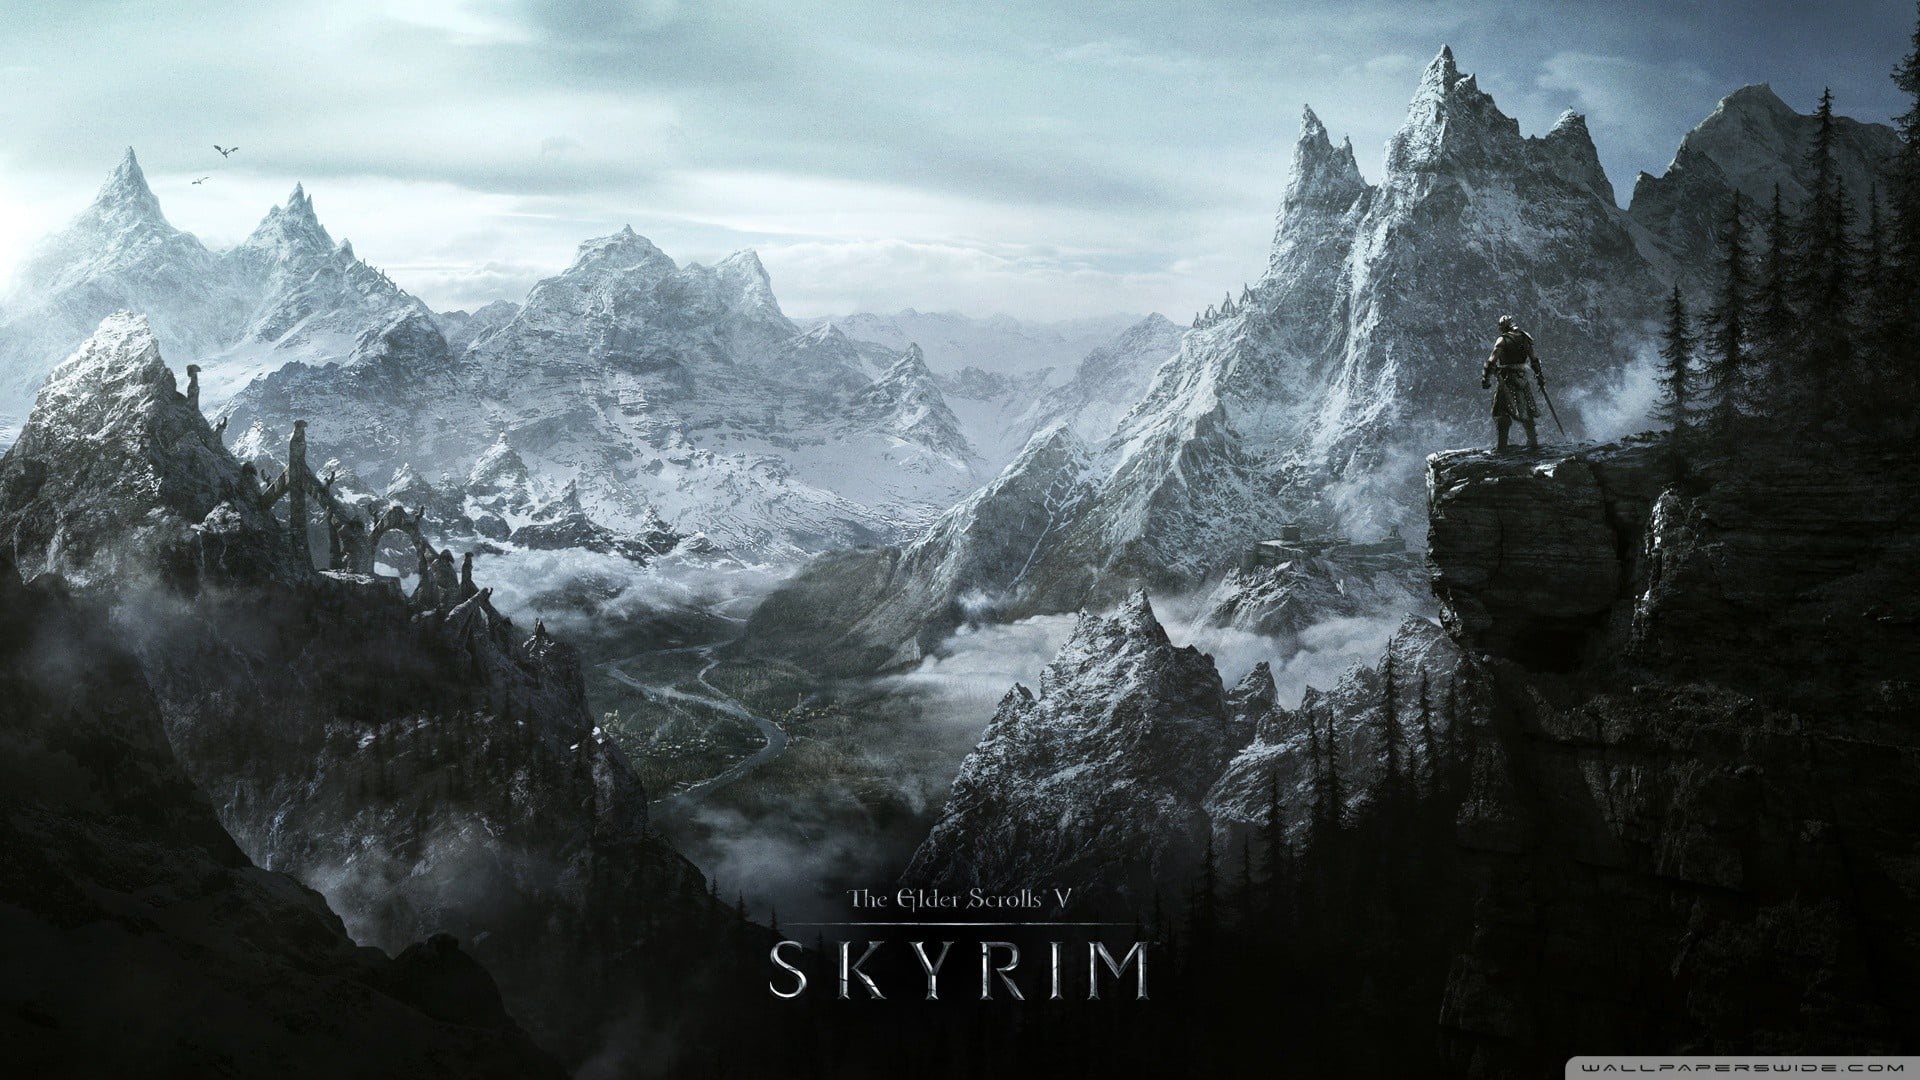 Skyrim poster, The Elder Scrolls V: Skyrim